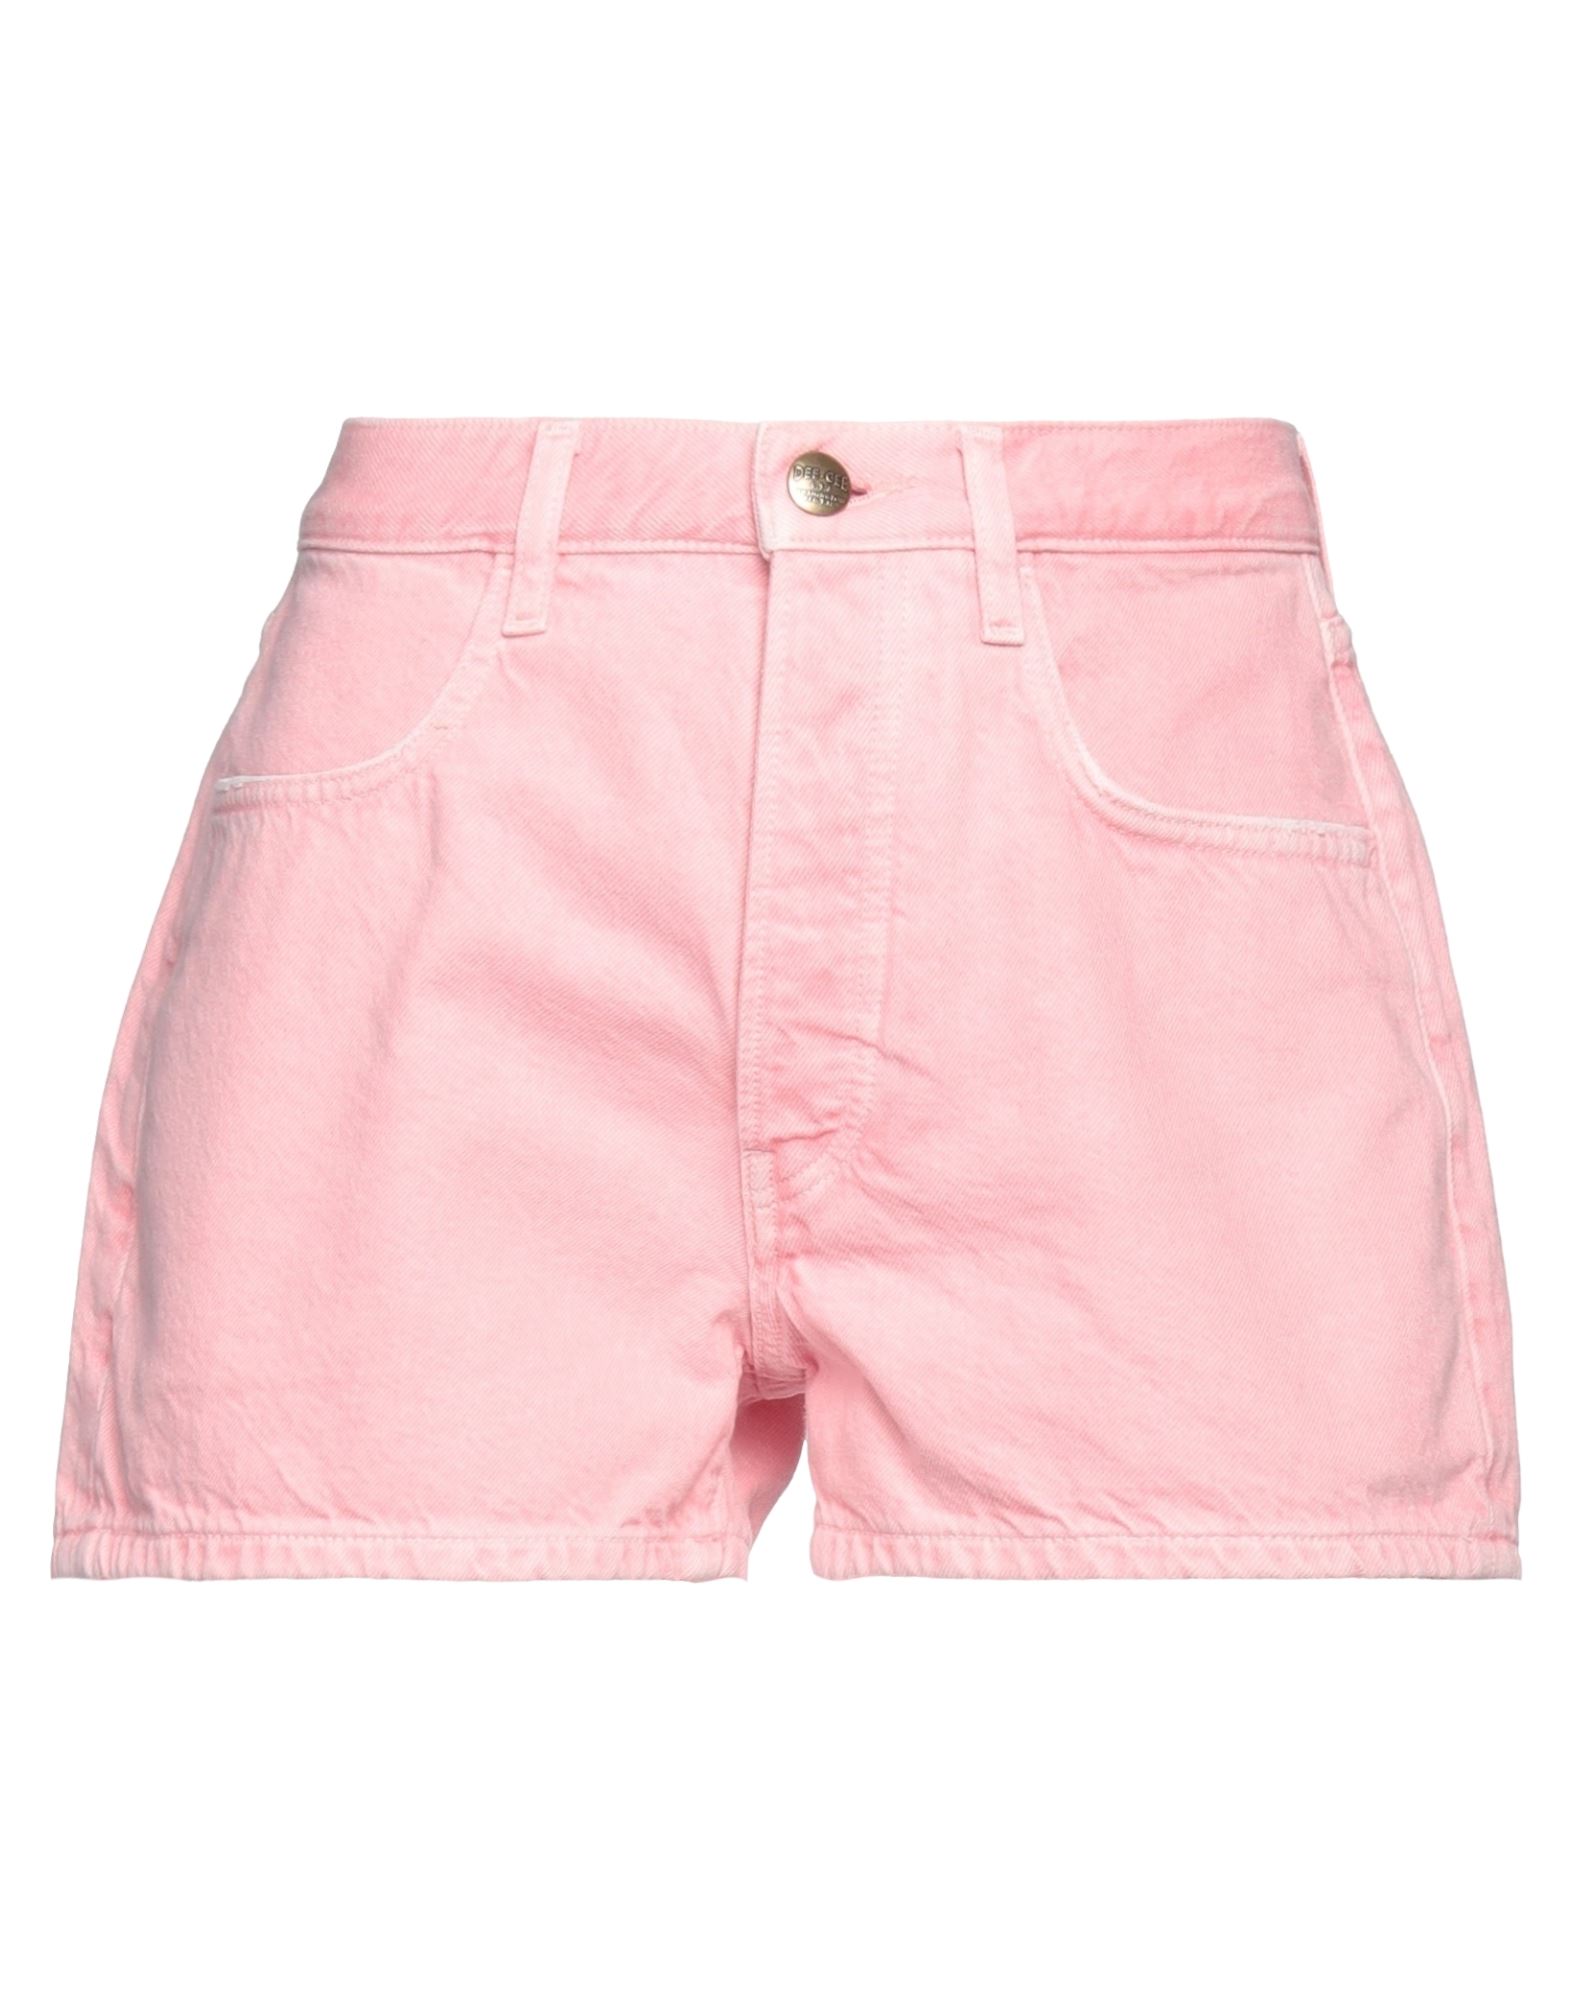 Washington Dee Cee Washington Dee-cee Denim Shorts In Pink